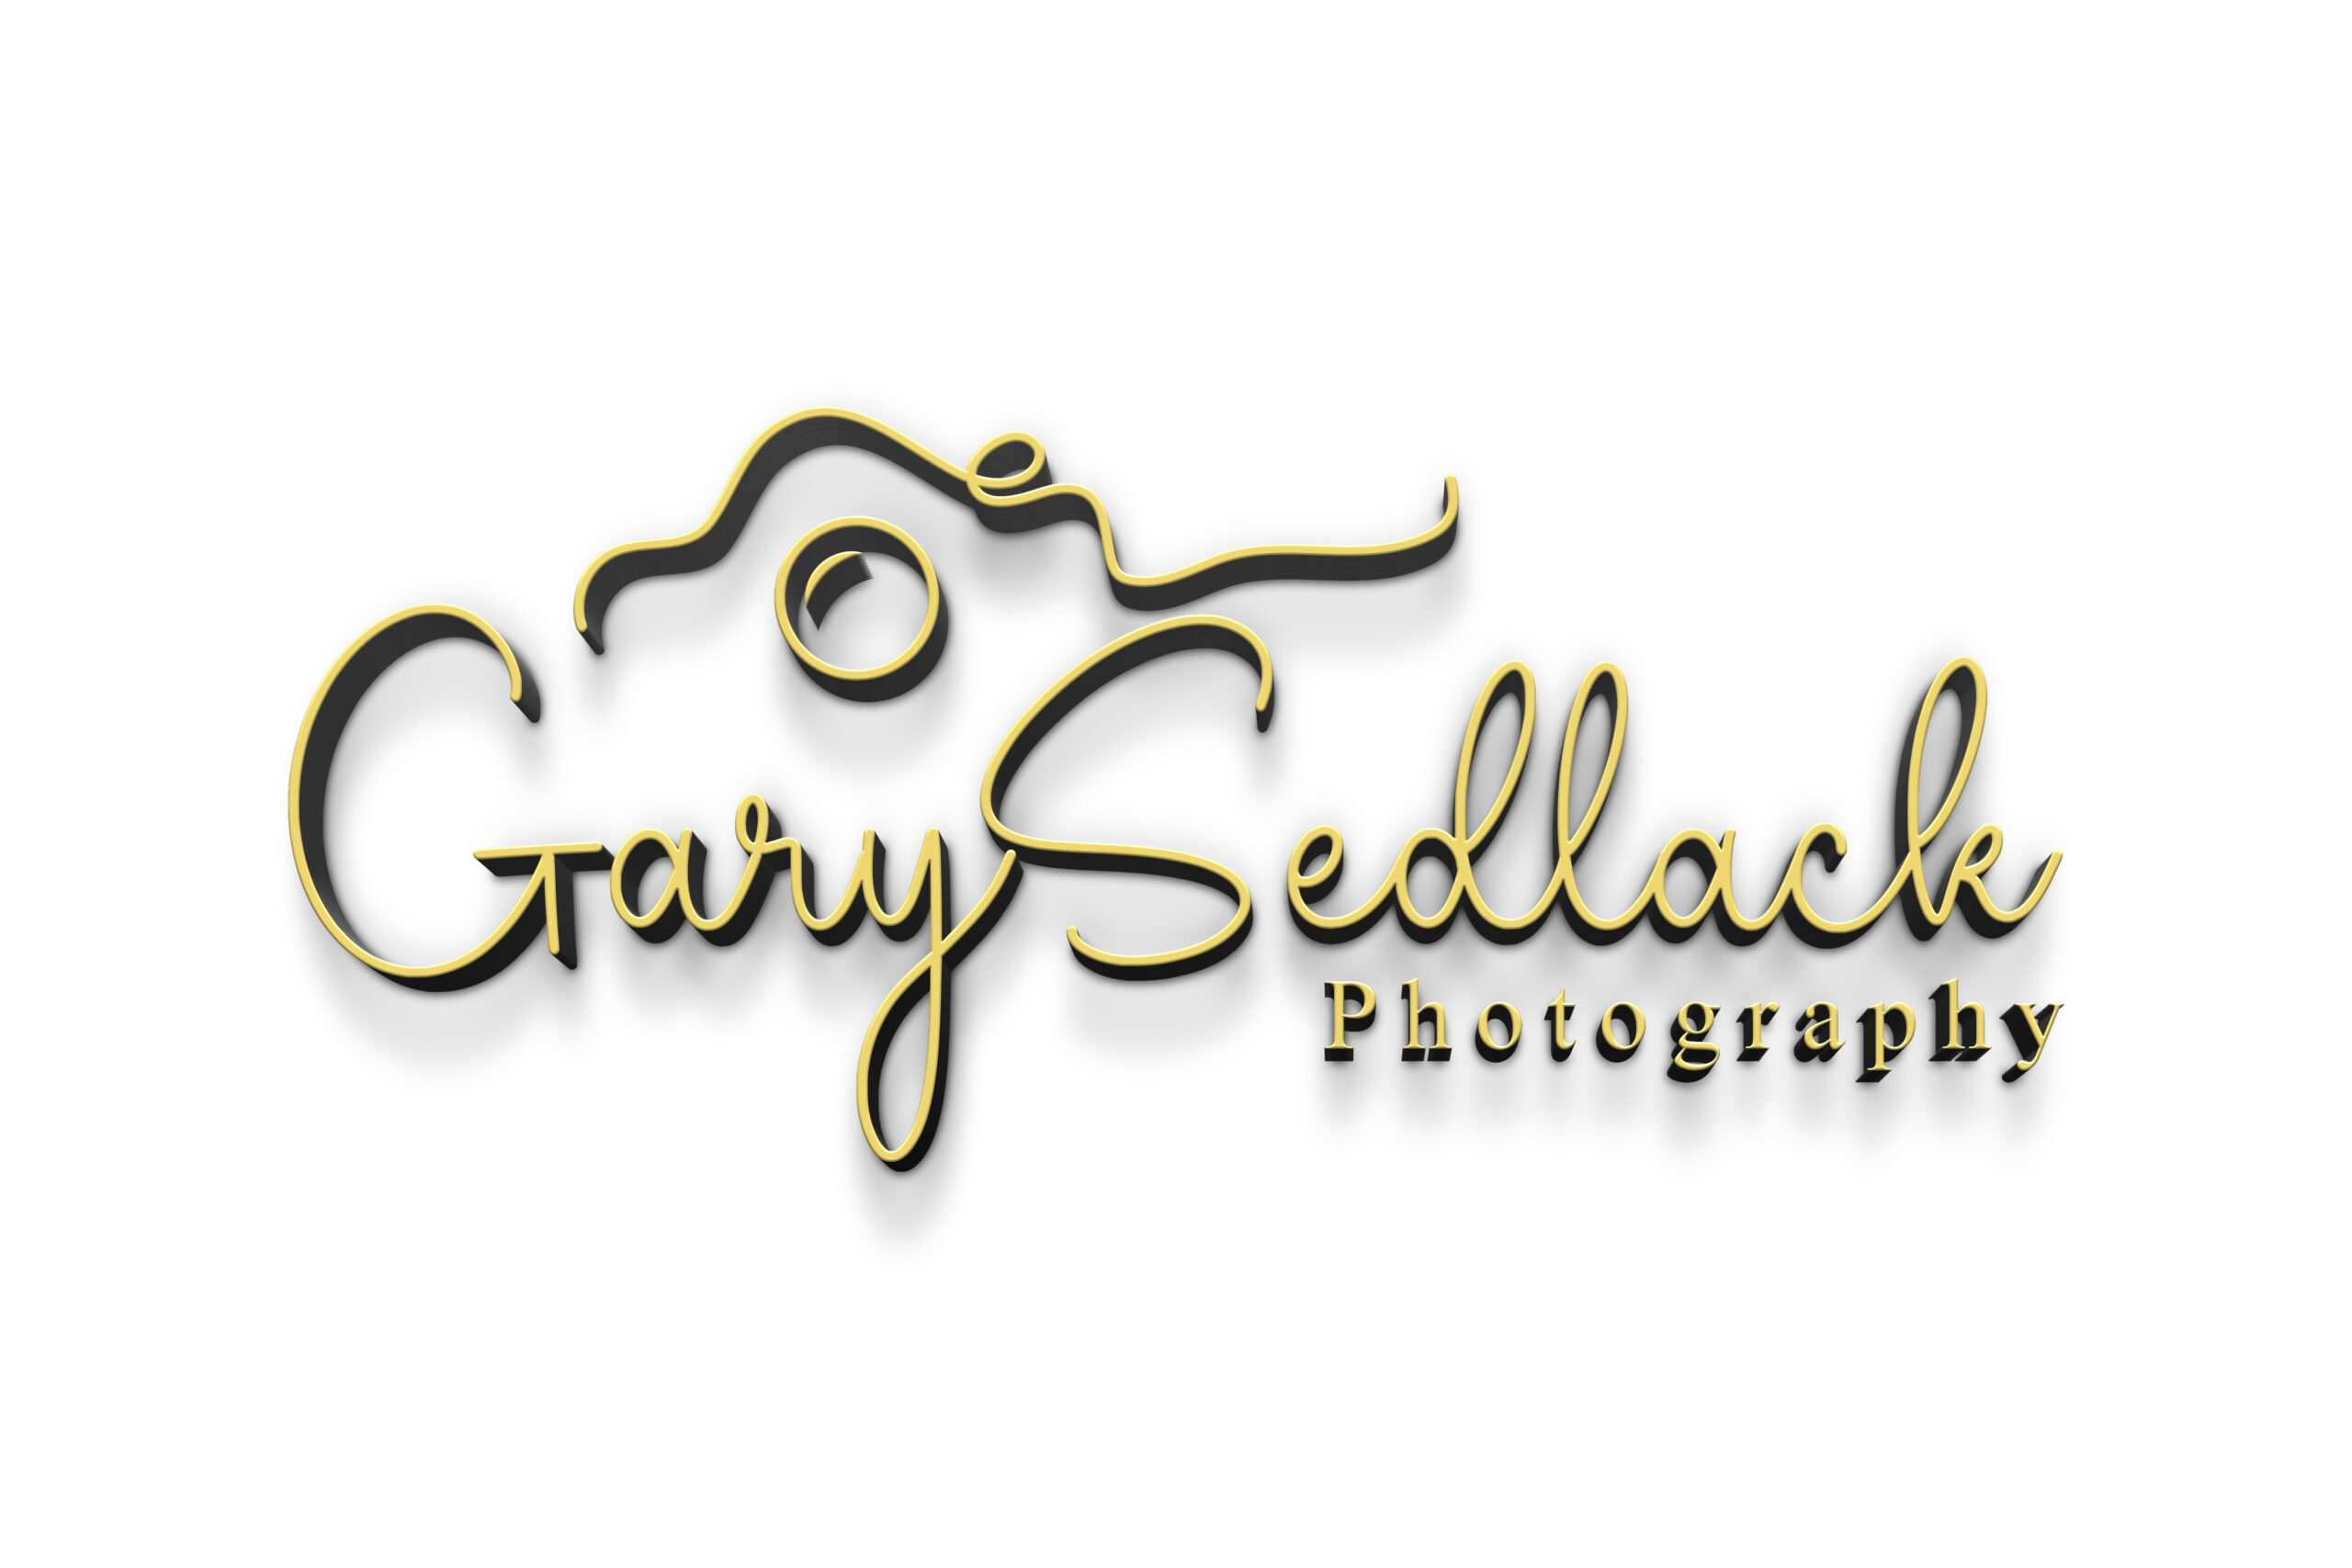 Gary Sedlack Photography